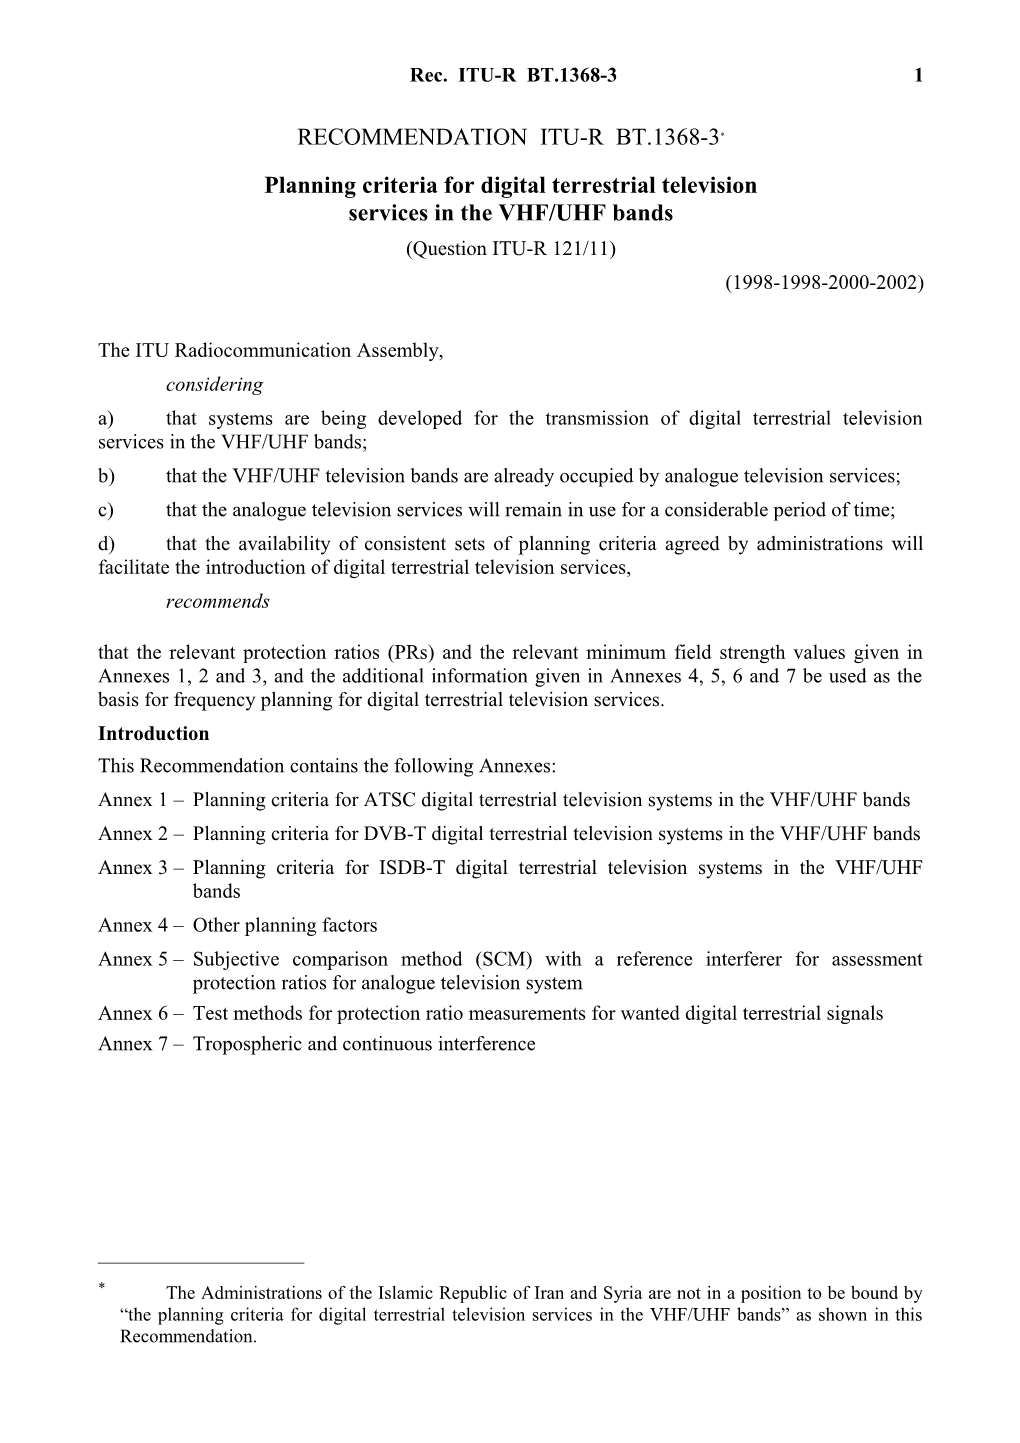 RECOMMENDATION ITU-R BT.1368-3 - Planning Criteria for Digital Terrestrial Television Services